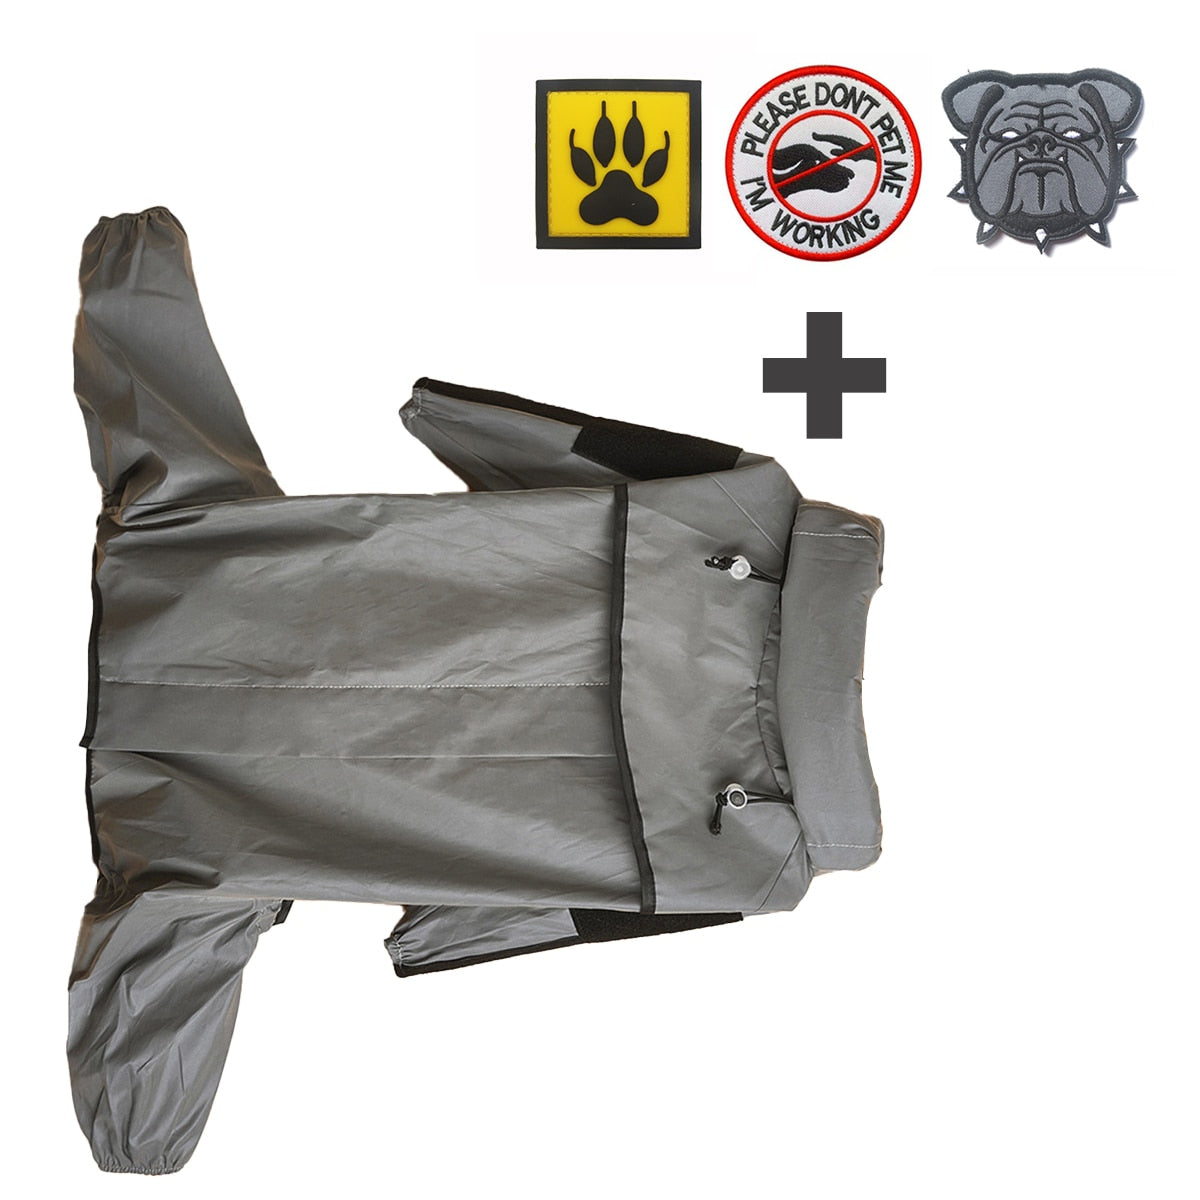 SafeCoat - Reflective All-weather Waterproof Dog Rain Coat